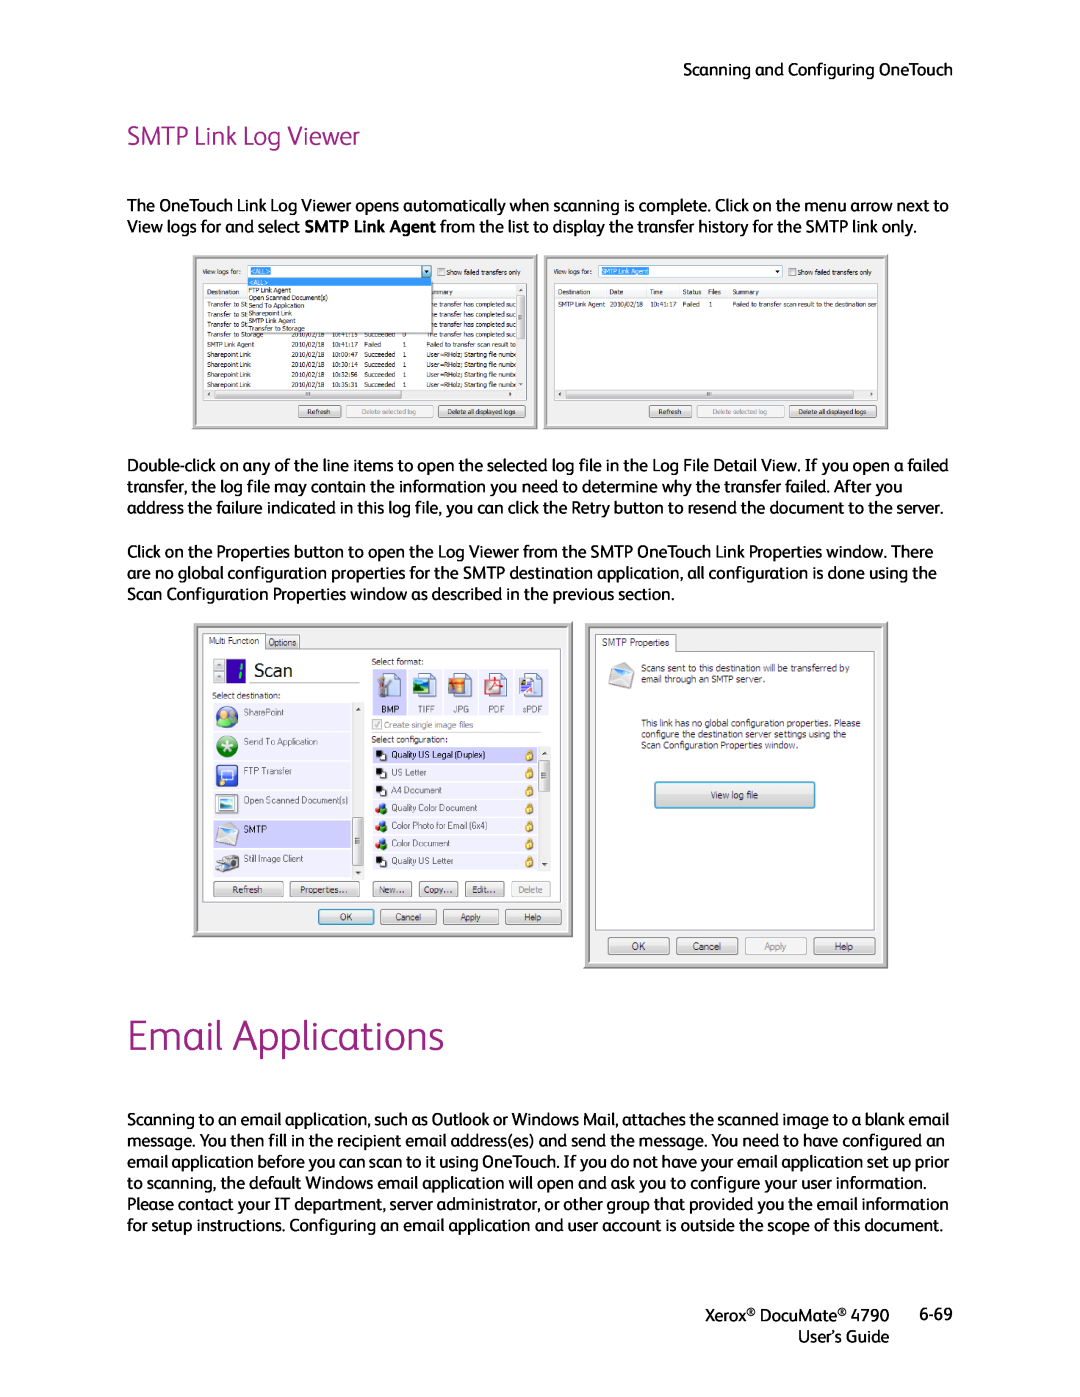 Xerox xerox documate manual Email Applications, SMTP Link Log Viewer 